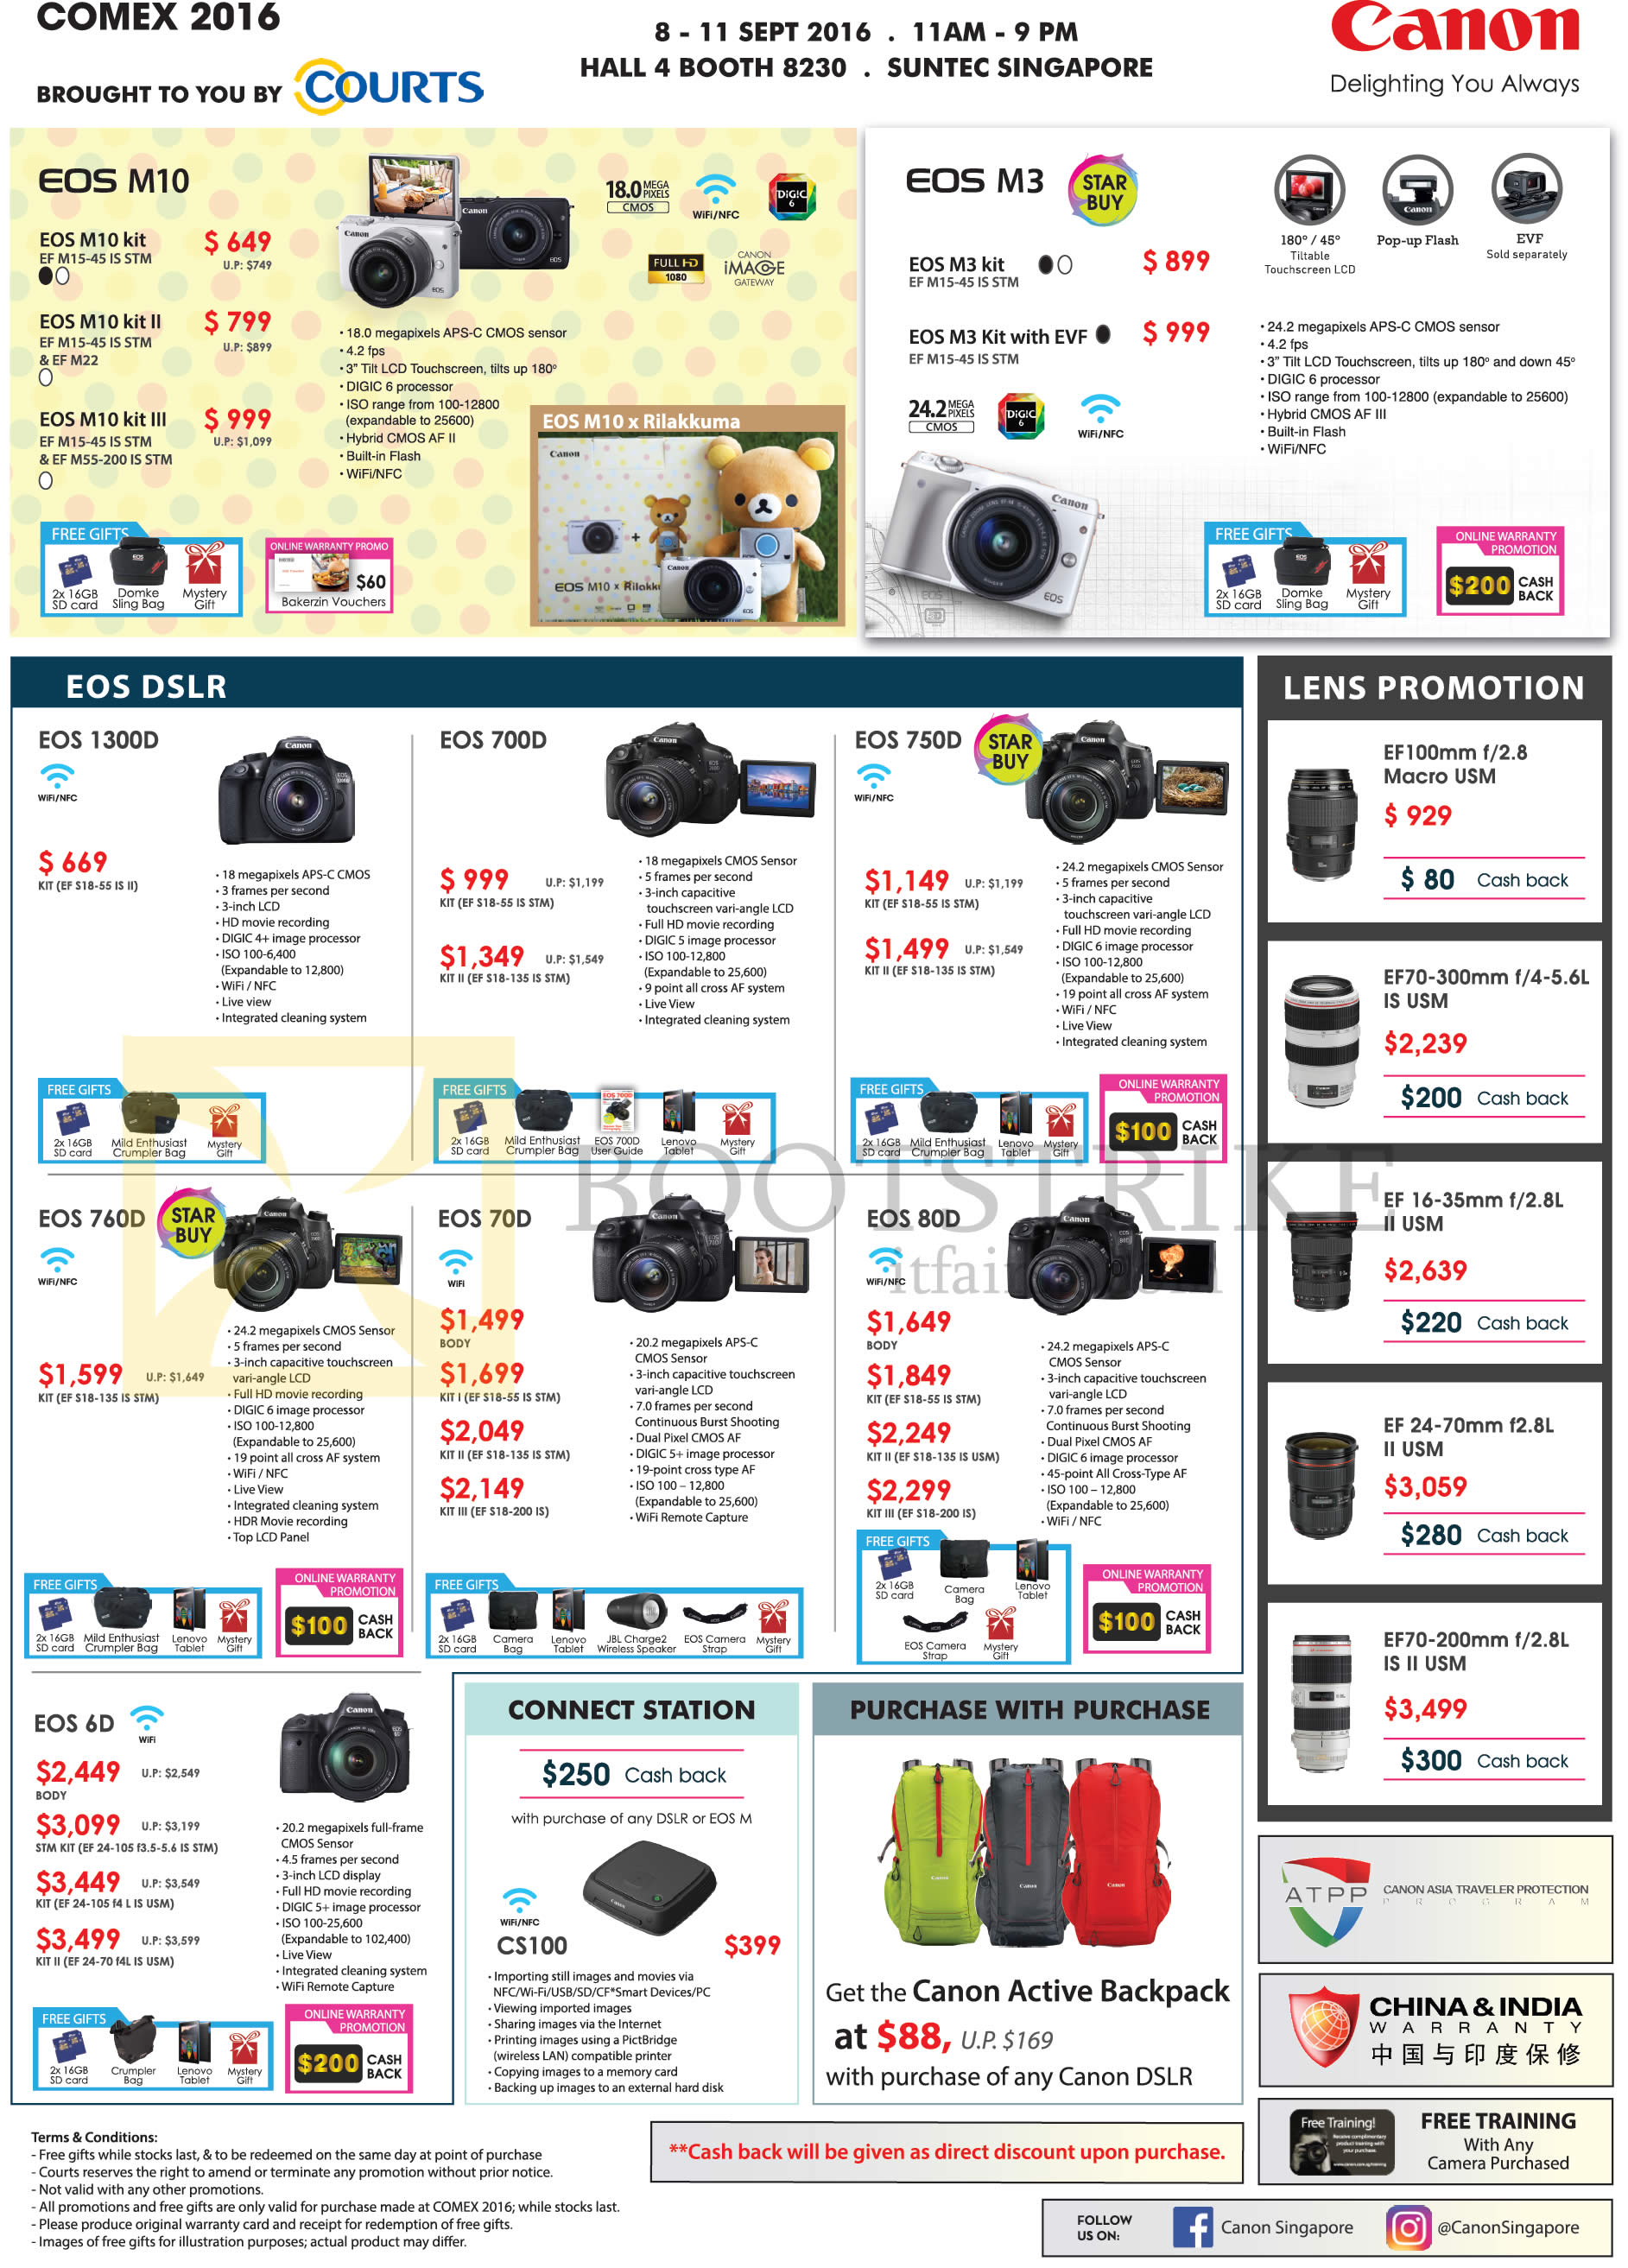 COMEX 2016 price list image brochure of Canon Digital Cameras DSLR, Camcorders, EOS M3, M10, 1300D, 700D, 750D, 760D, 70D, 80D, 6D, CS100